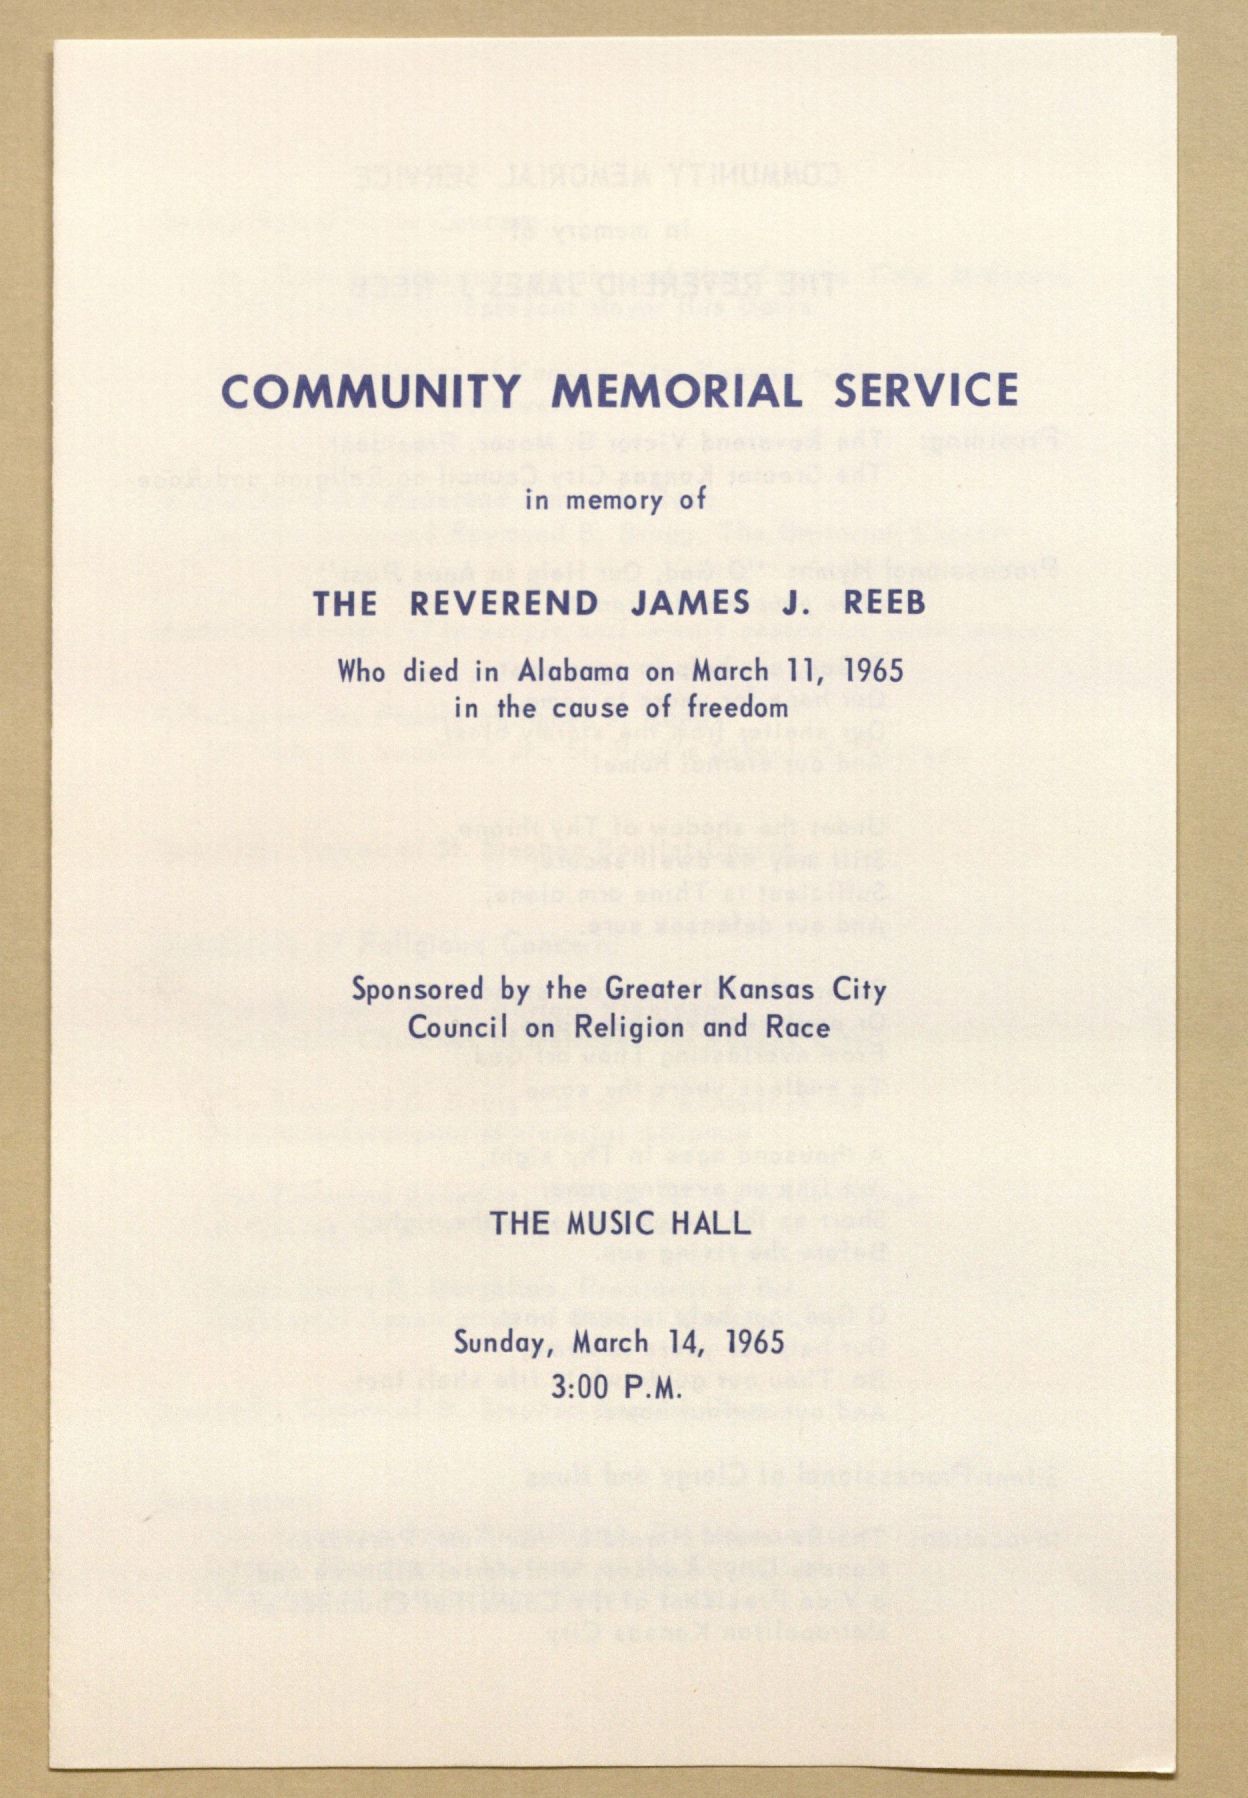 Second Reeb Memorial Program, March 14, 1965.